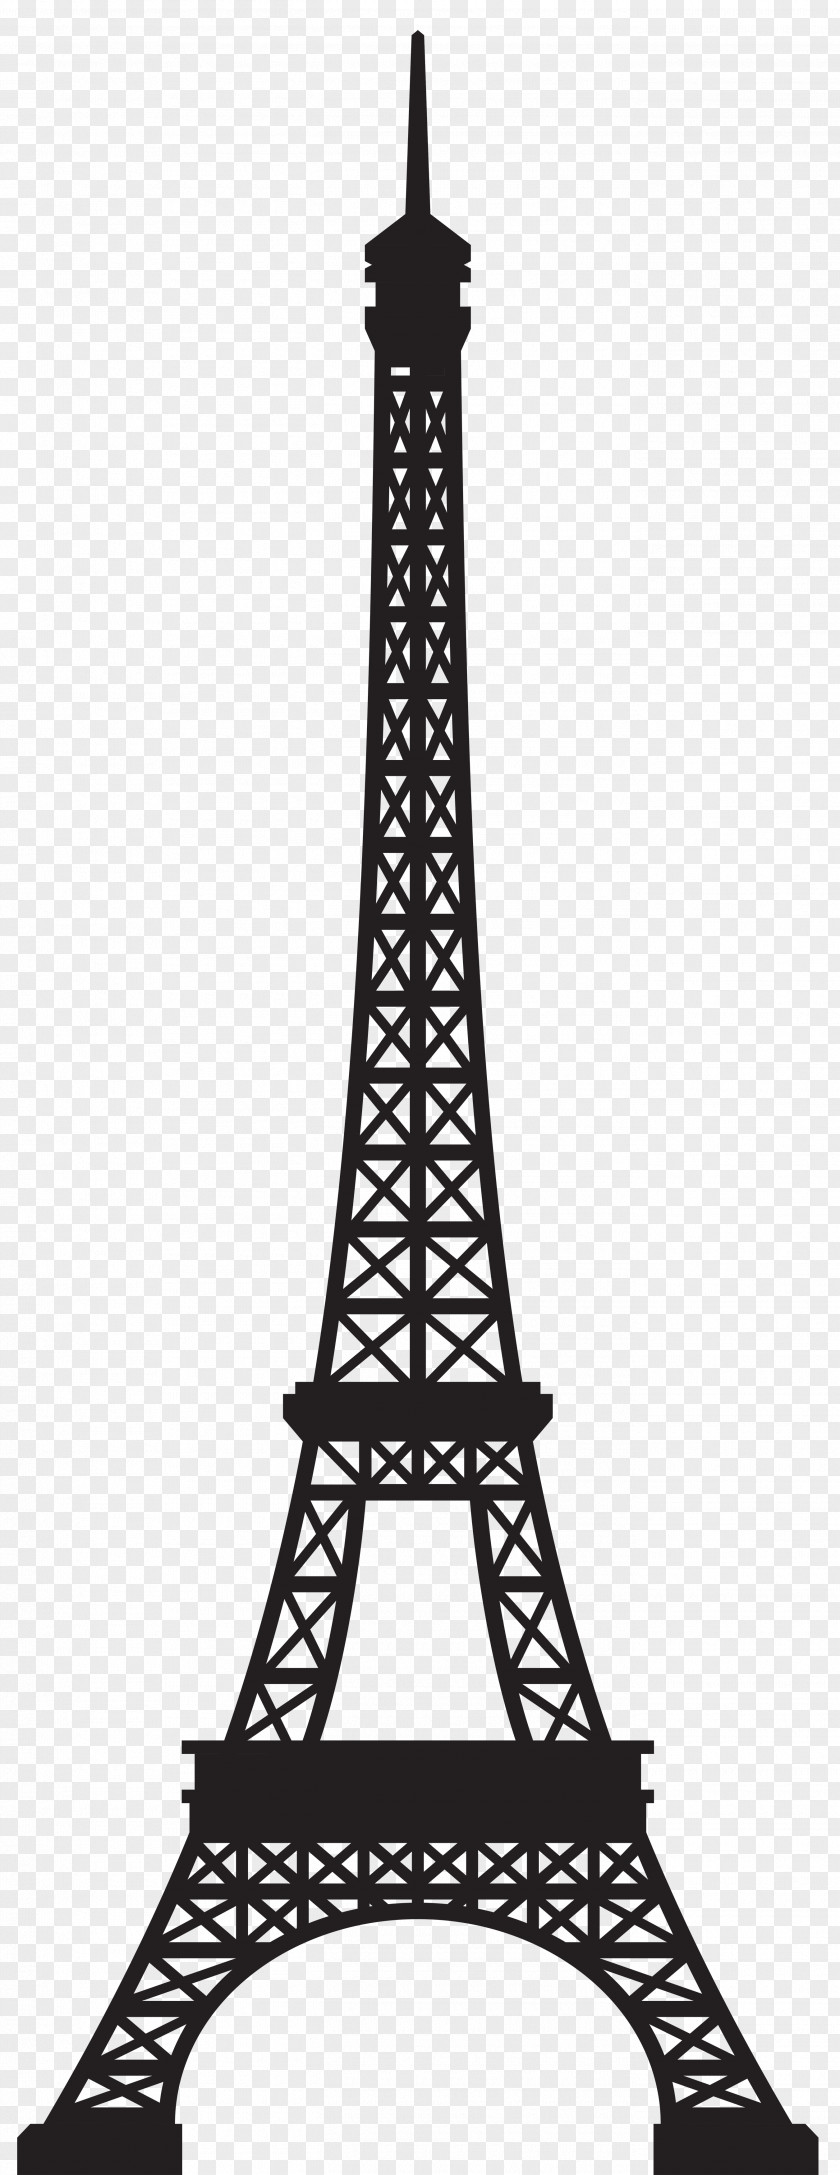 Eiffel Tower Silhouette Clip Art Image Landmark PNG